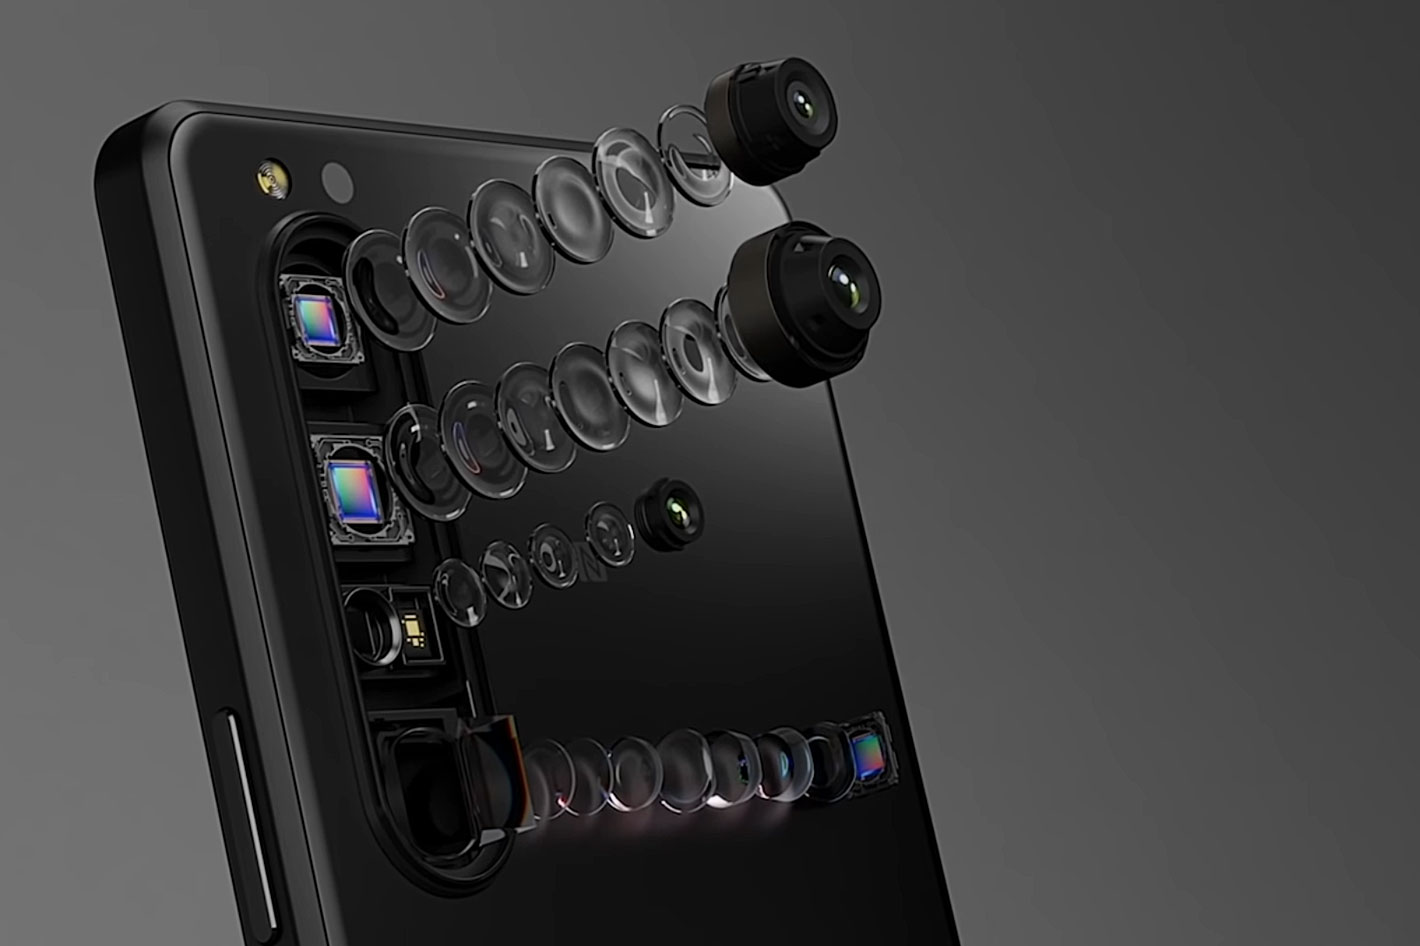 Sony Xperia 1 III and 5 III introduce variable telephoto zoom